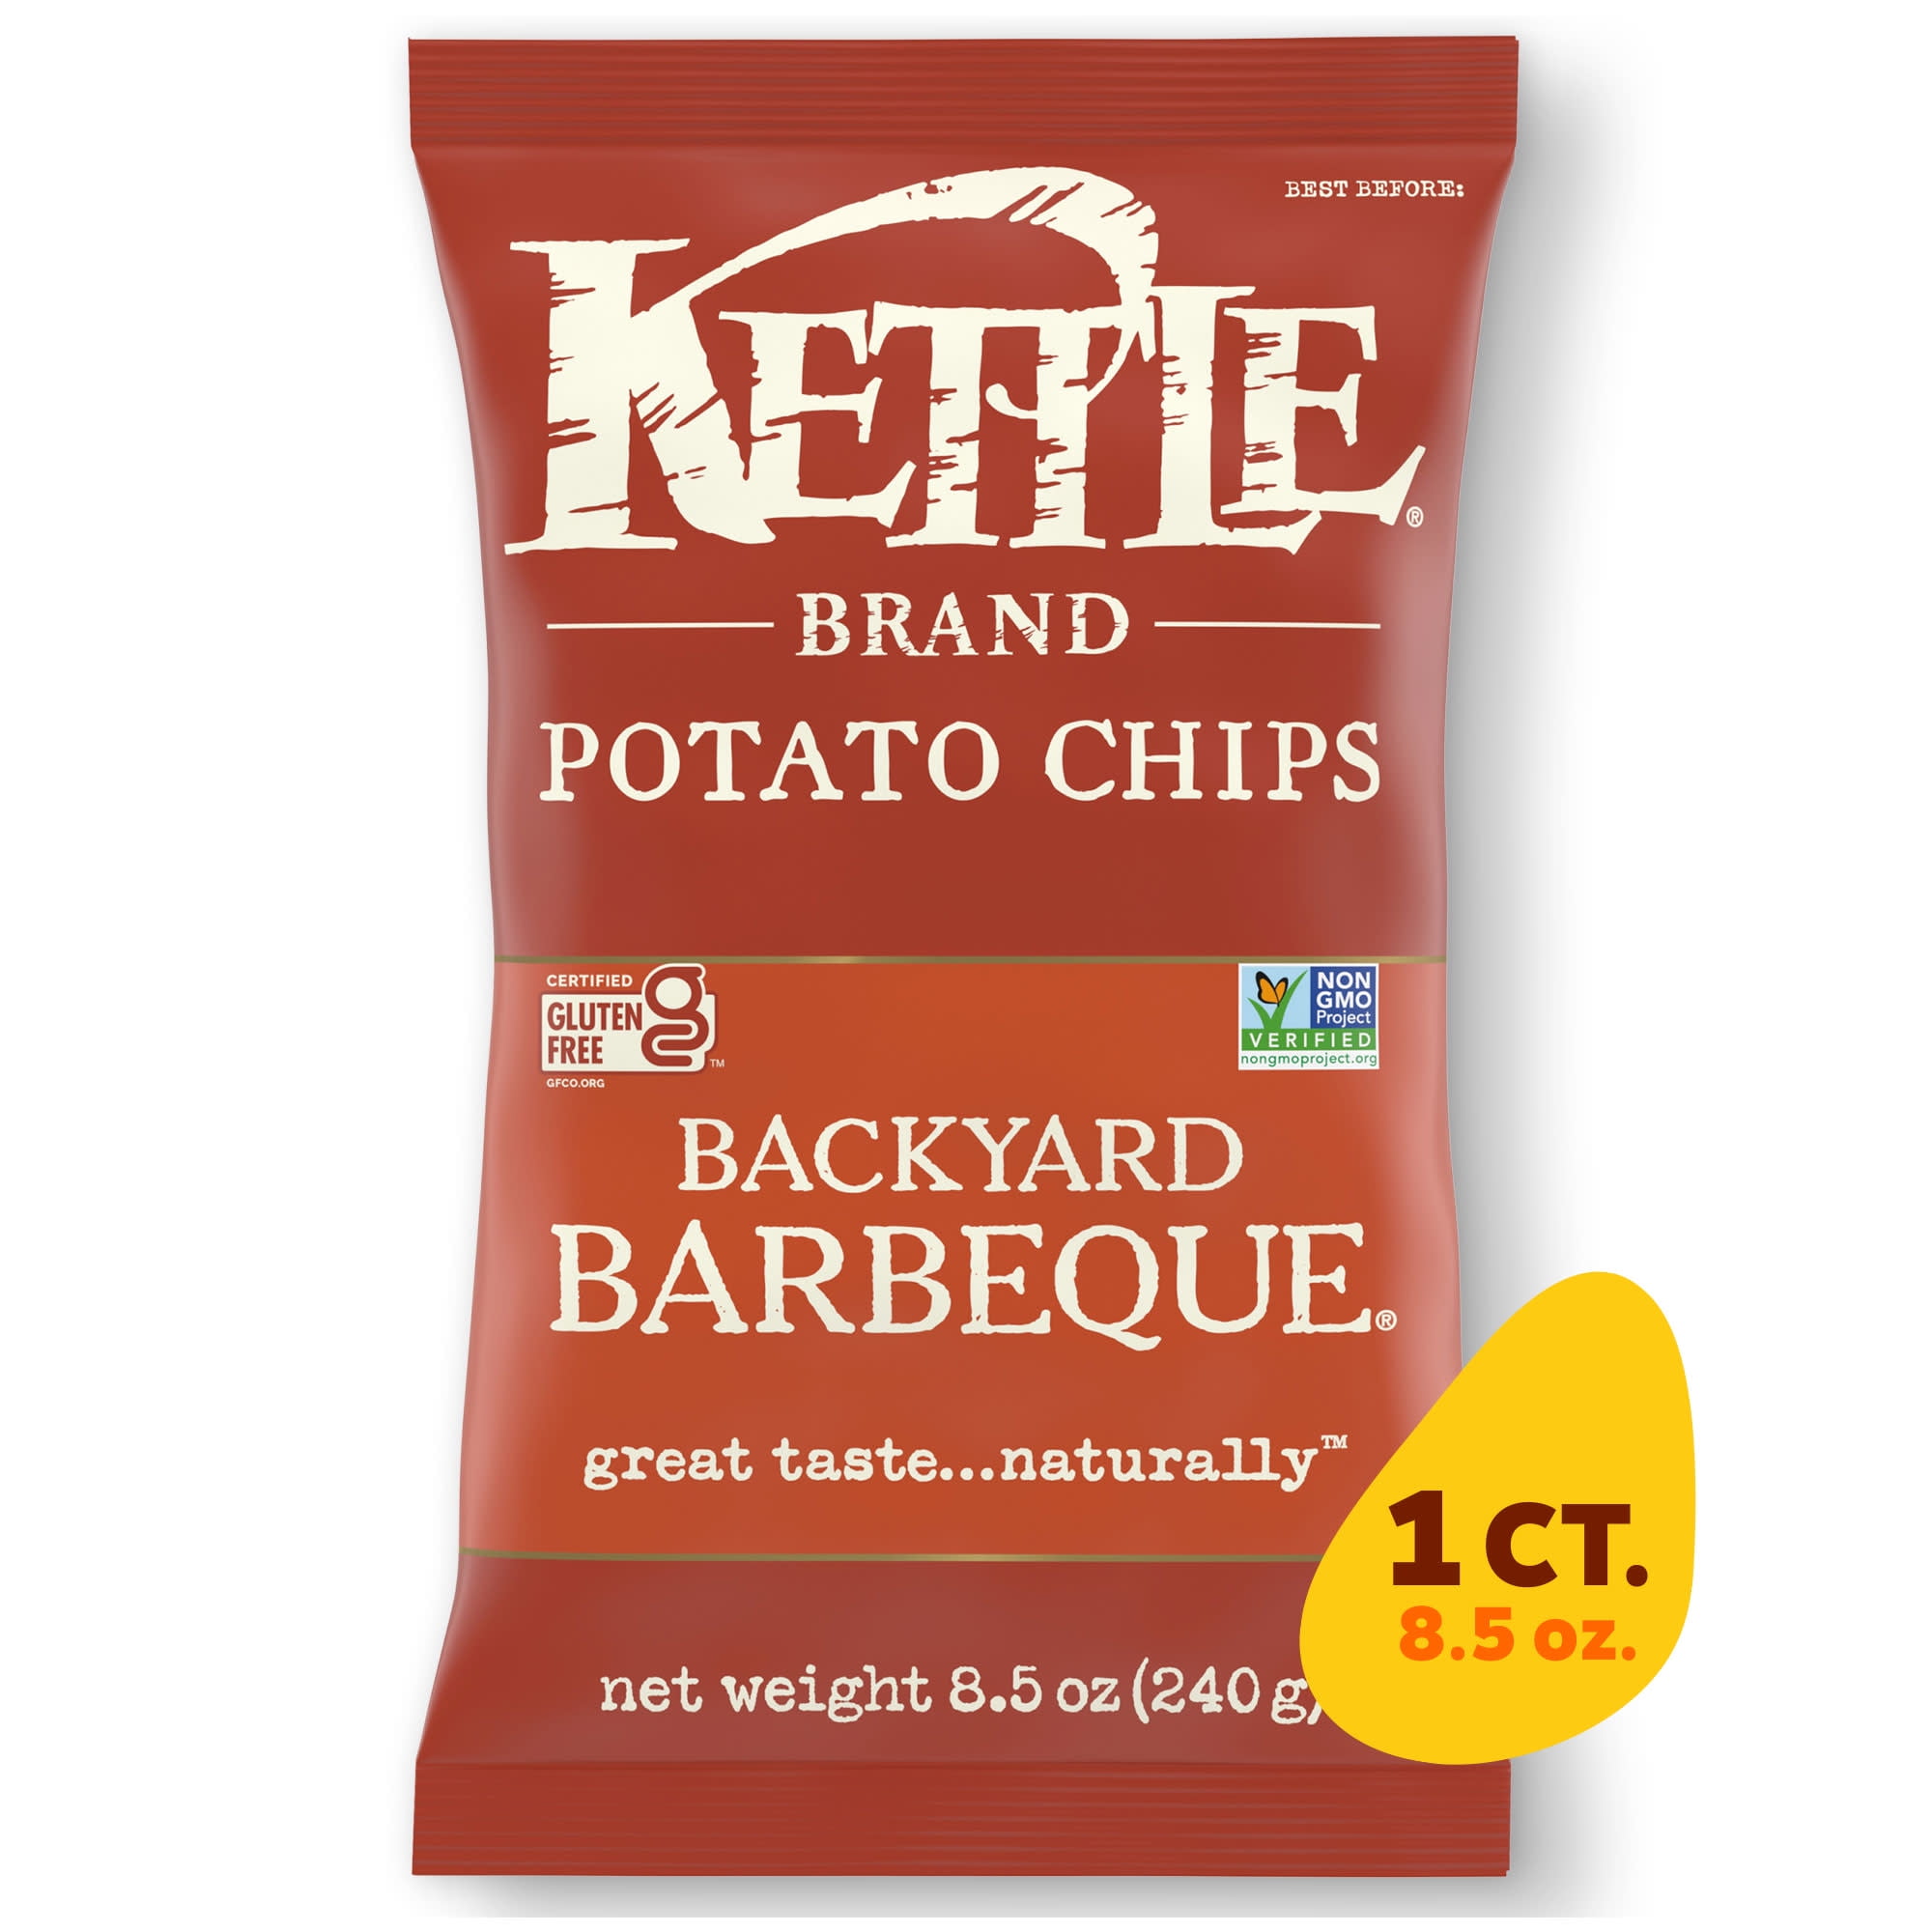 Kettle Brand Potato Chips, Backyard Barbeque Kettle Chips, 8.5 oz